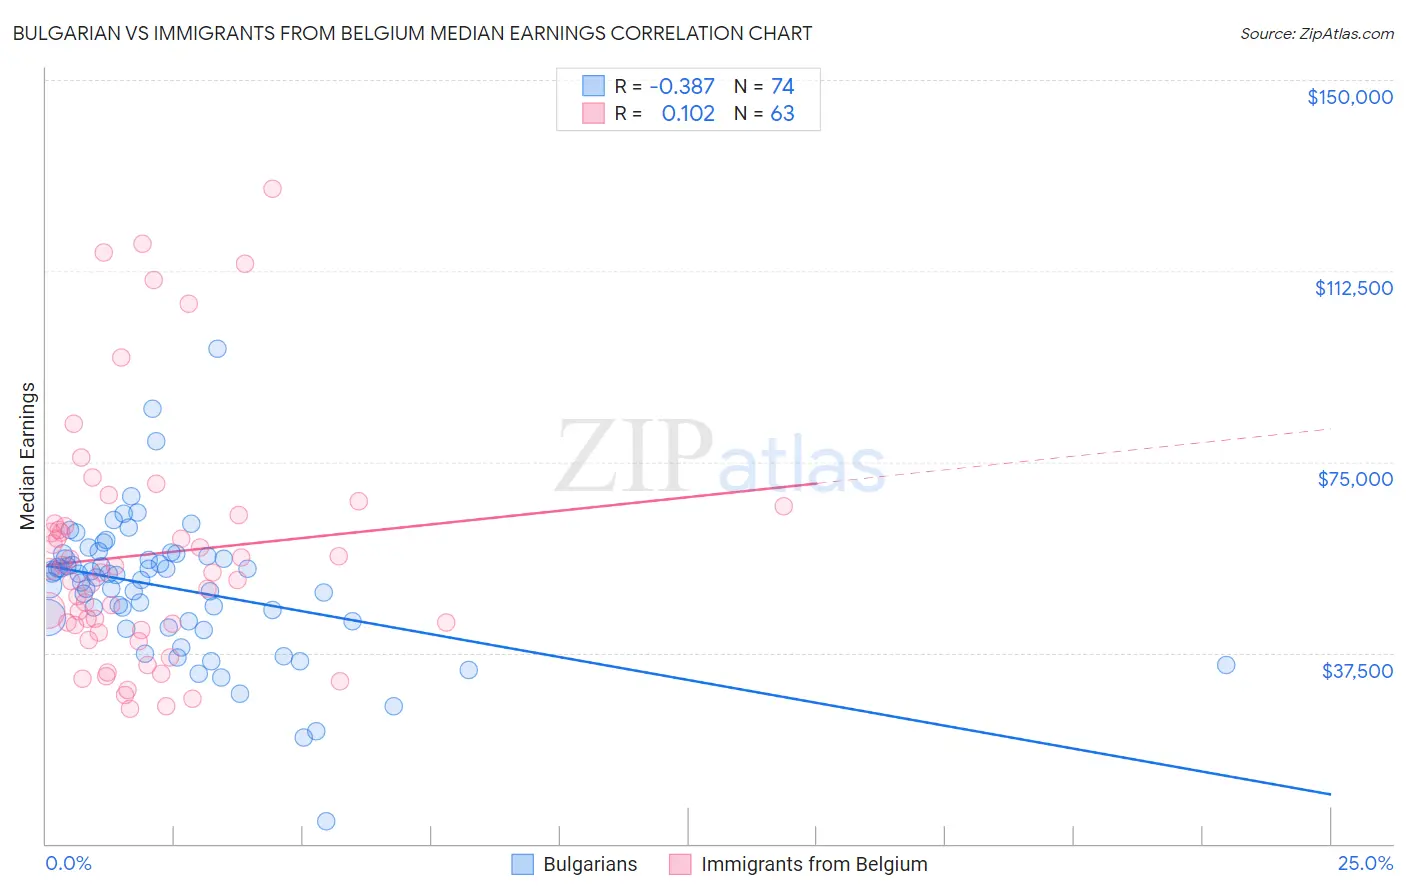 Bulgarian vs Immigrants from Belgium Median Earnings